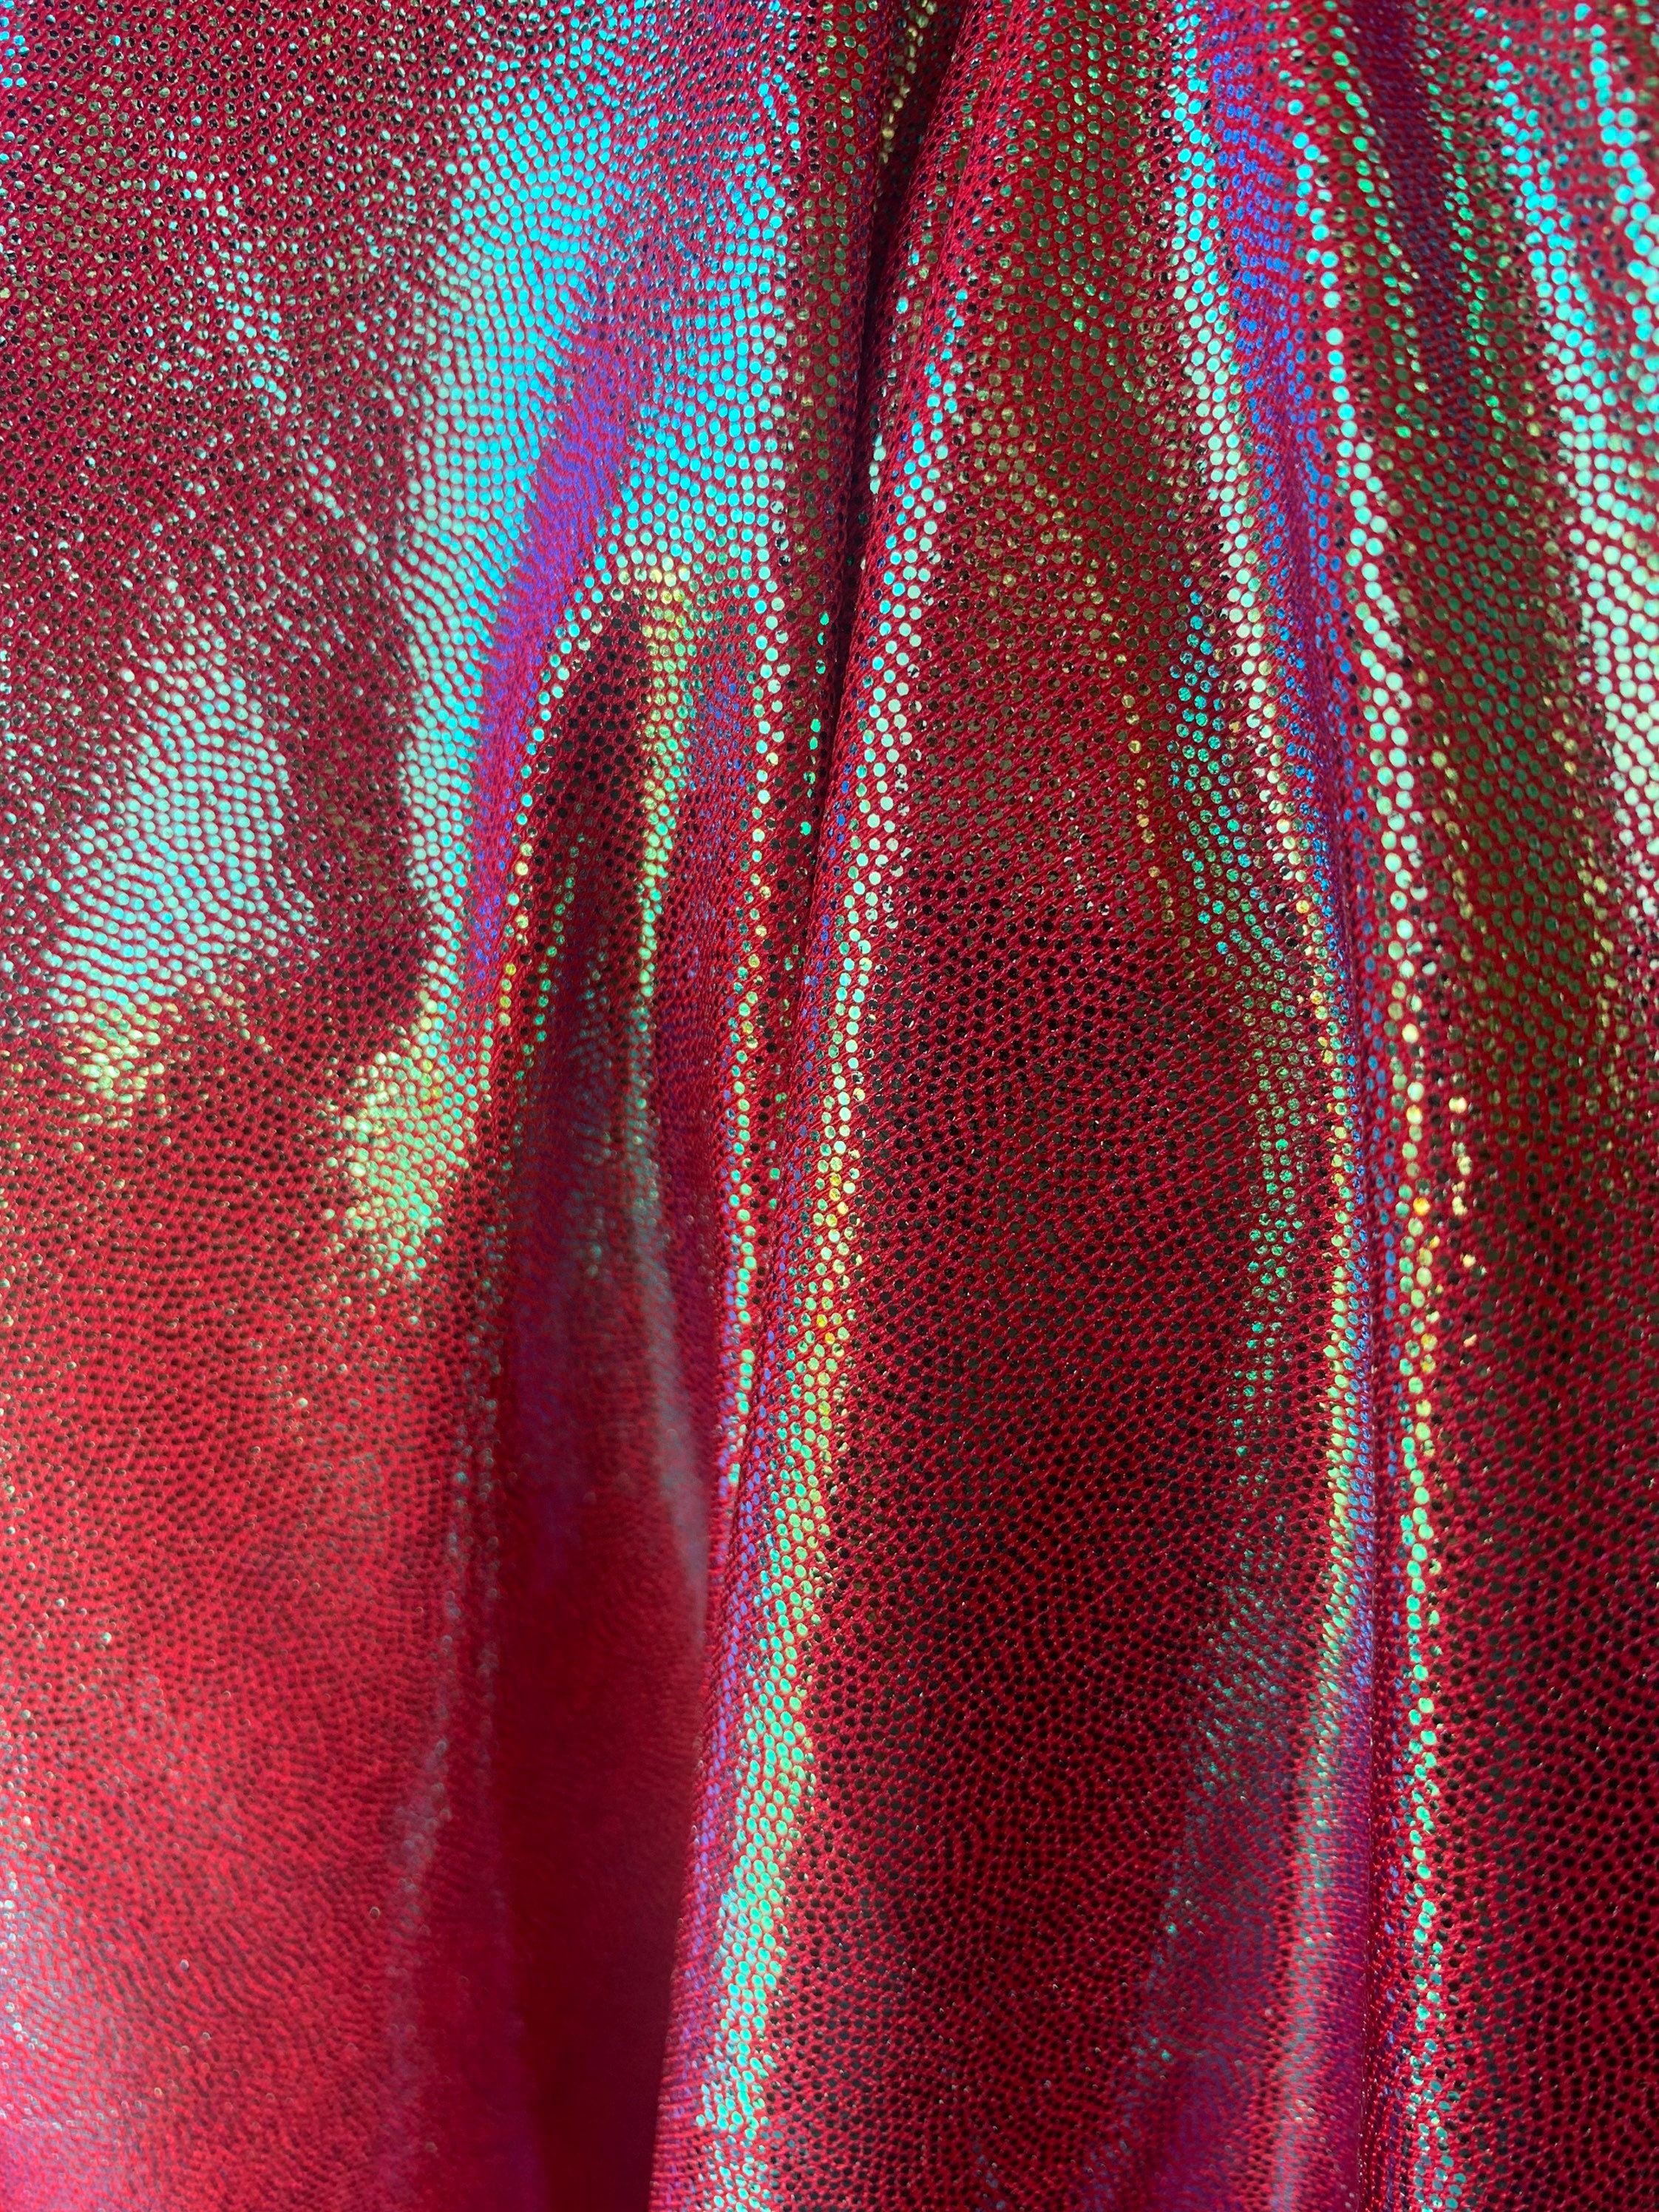 Iridescent Red Nylon Fabric 4 Way Foggy - Etsy